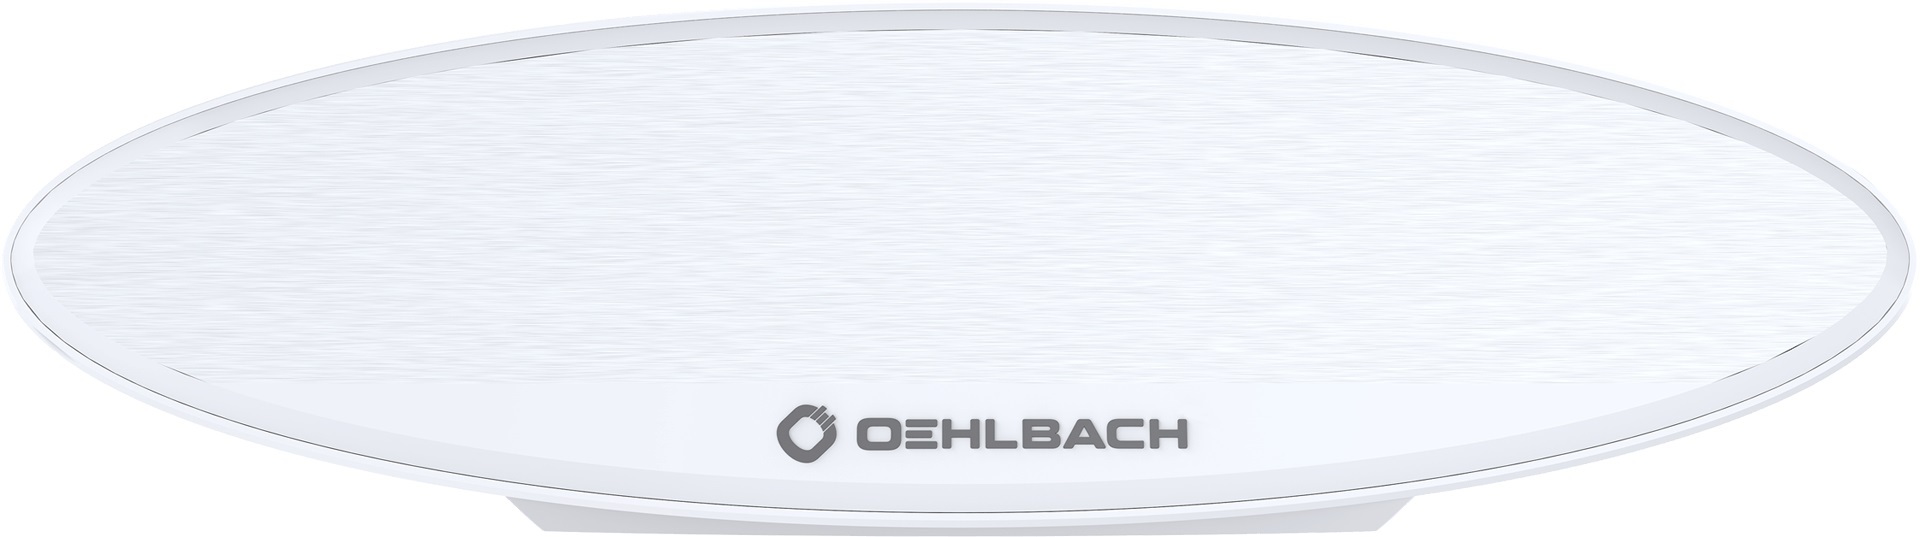 Oehlbach Scope Oval DVB-T2, DVB-T2 HD digitális tv antenna fehér OB 17...